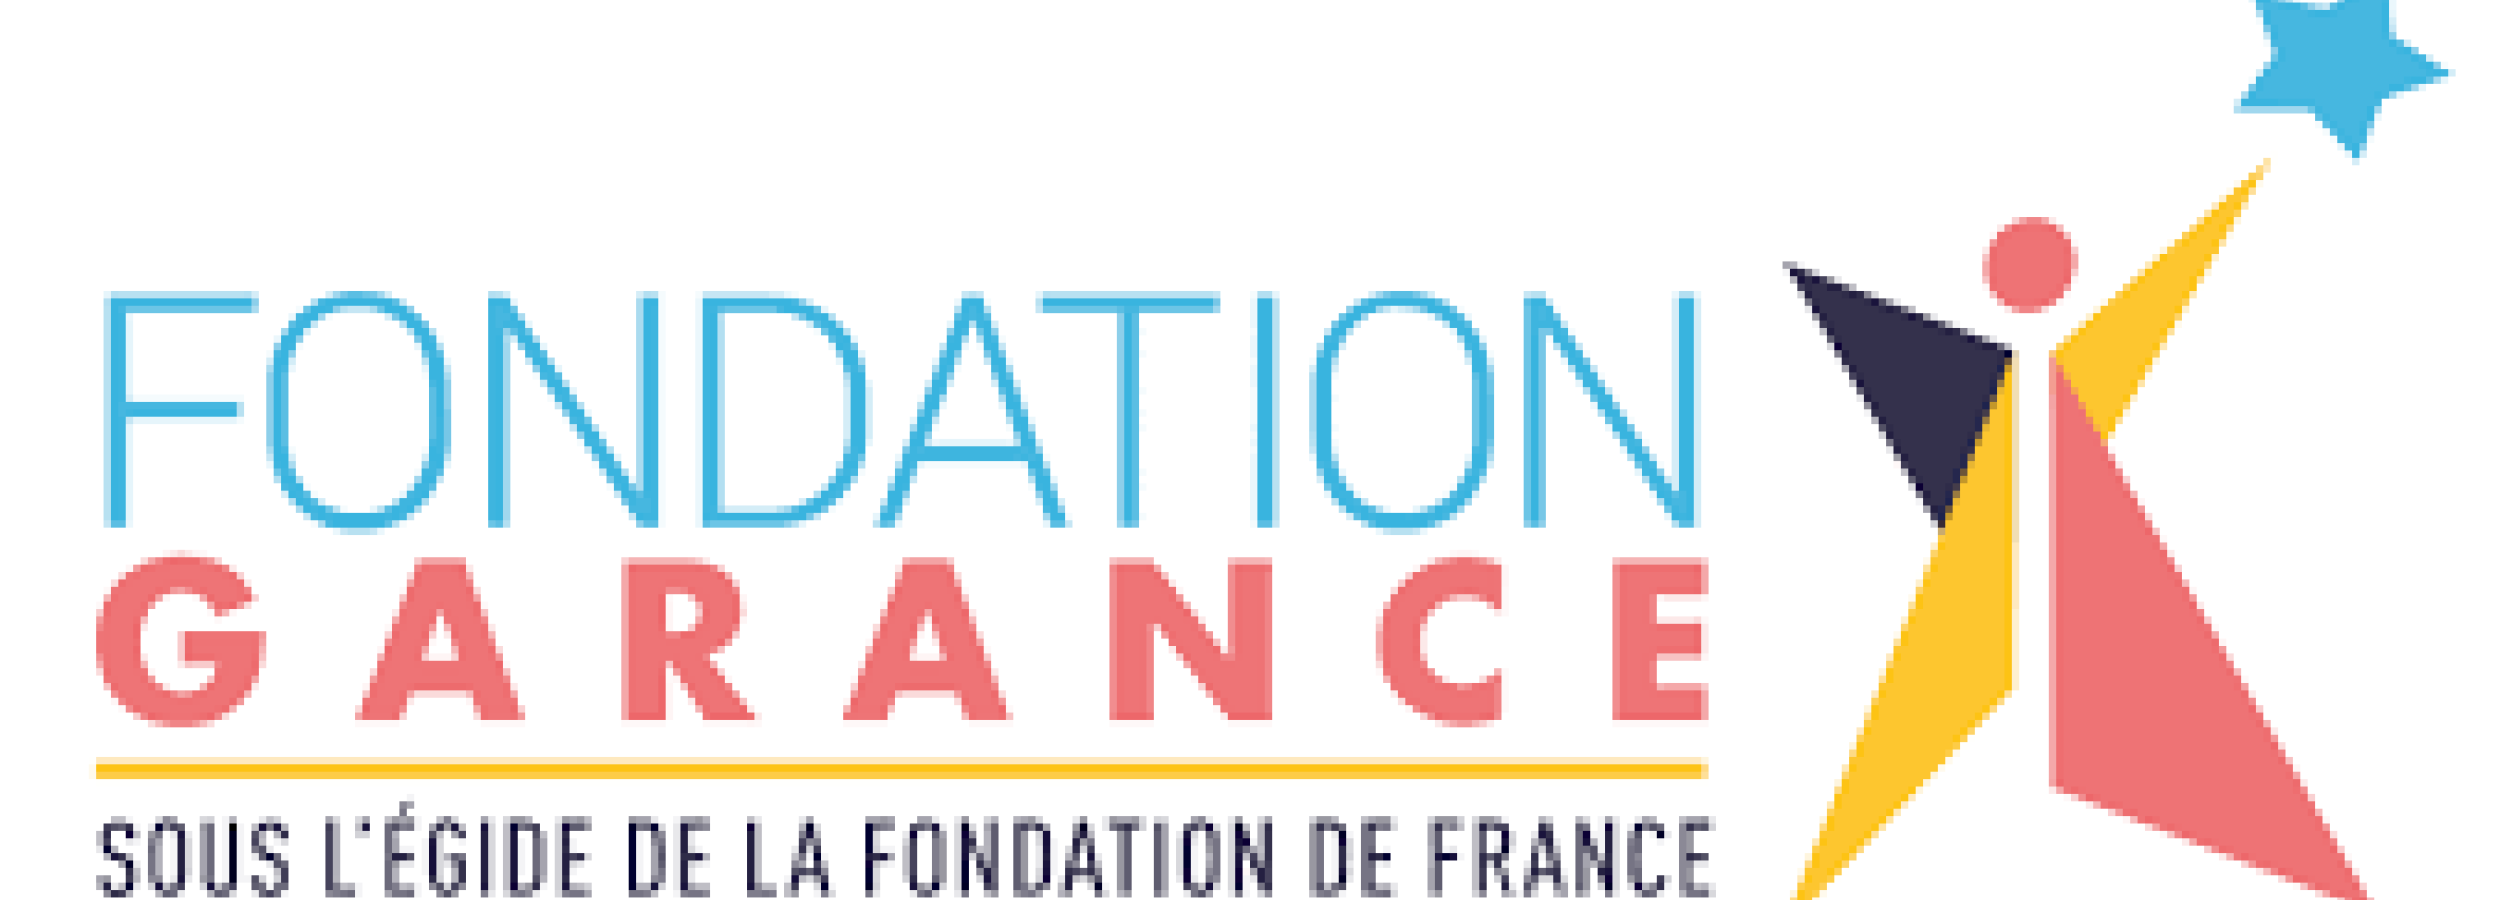 Fondation Garance